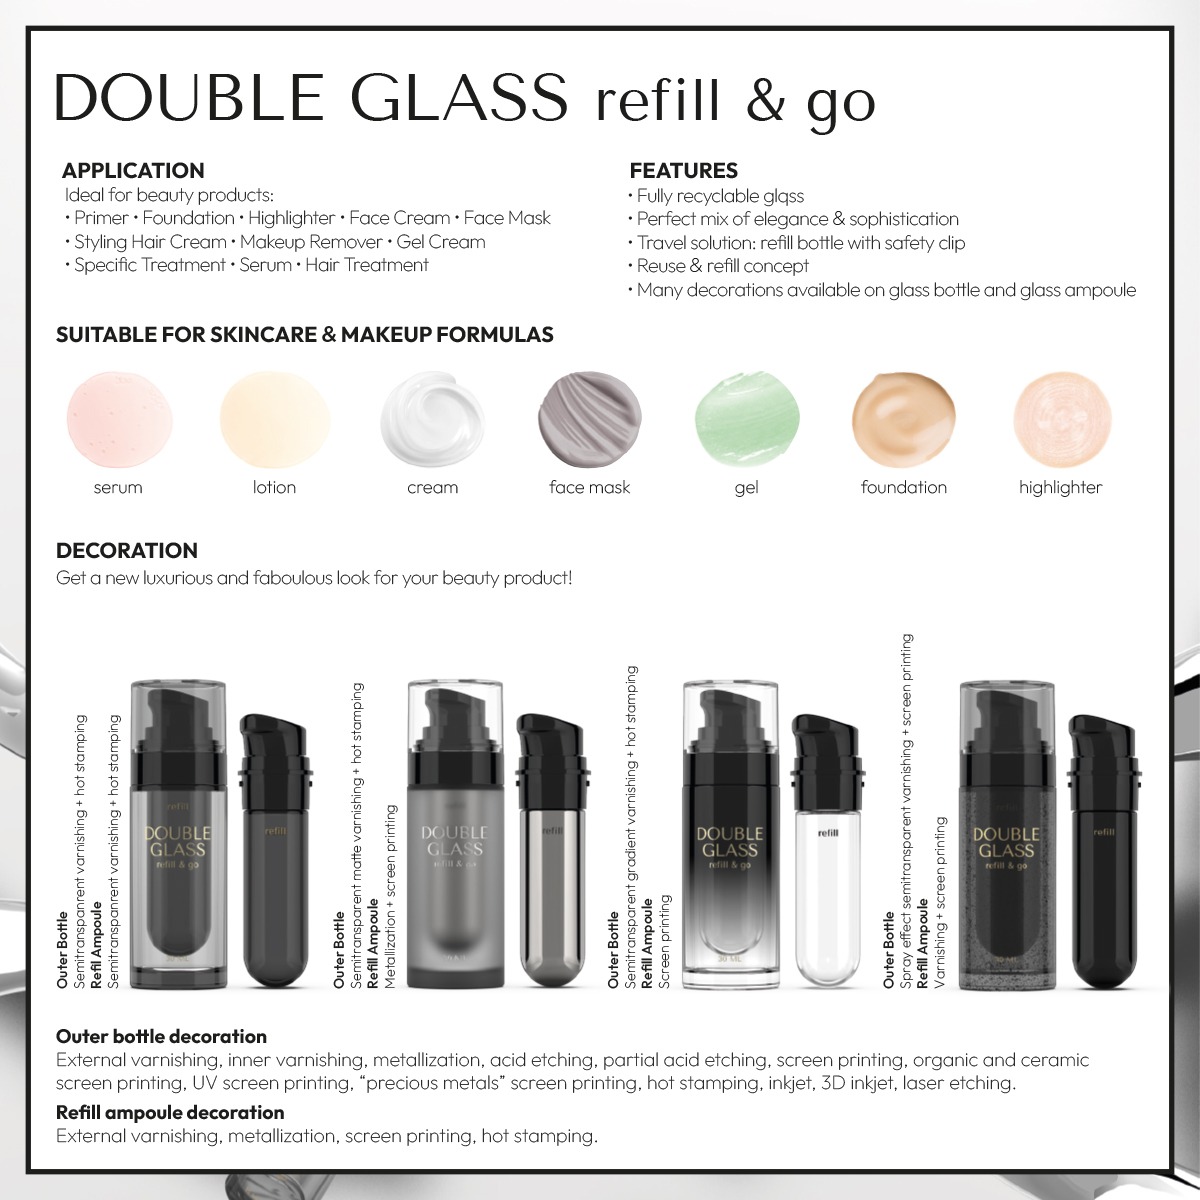 05-DOUBLE GLASS REFILL & GO